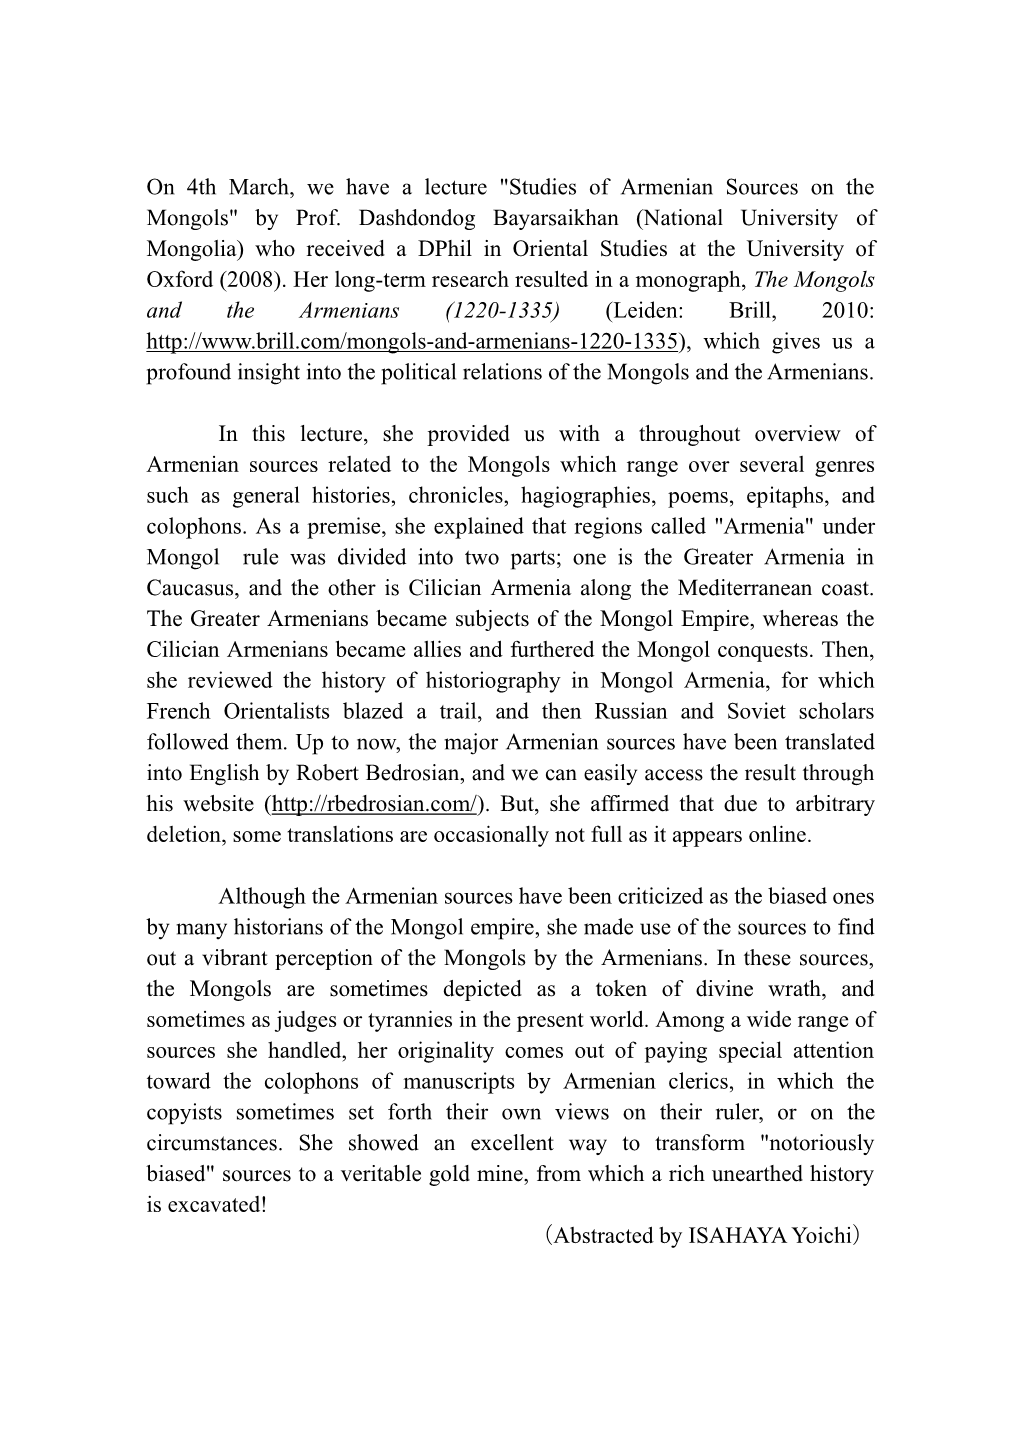 By Prof. Dashdondog Bayarsaikhan (National University of Mongolia) Who Received a Dphil in Oriental Studies at the University of Oxford (2008)